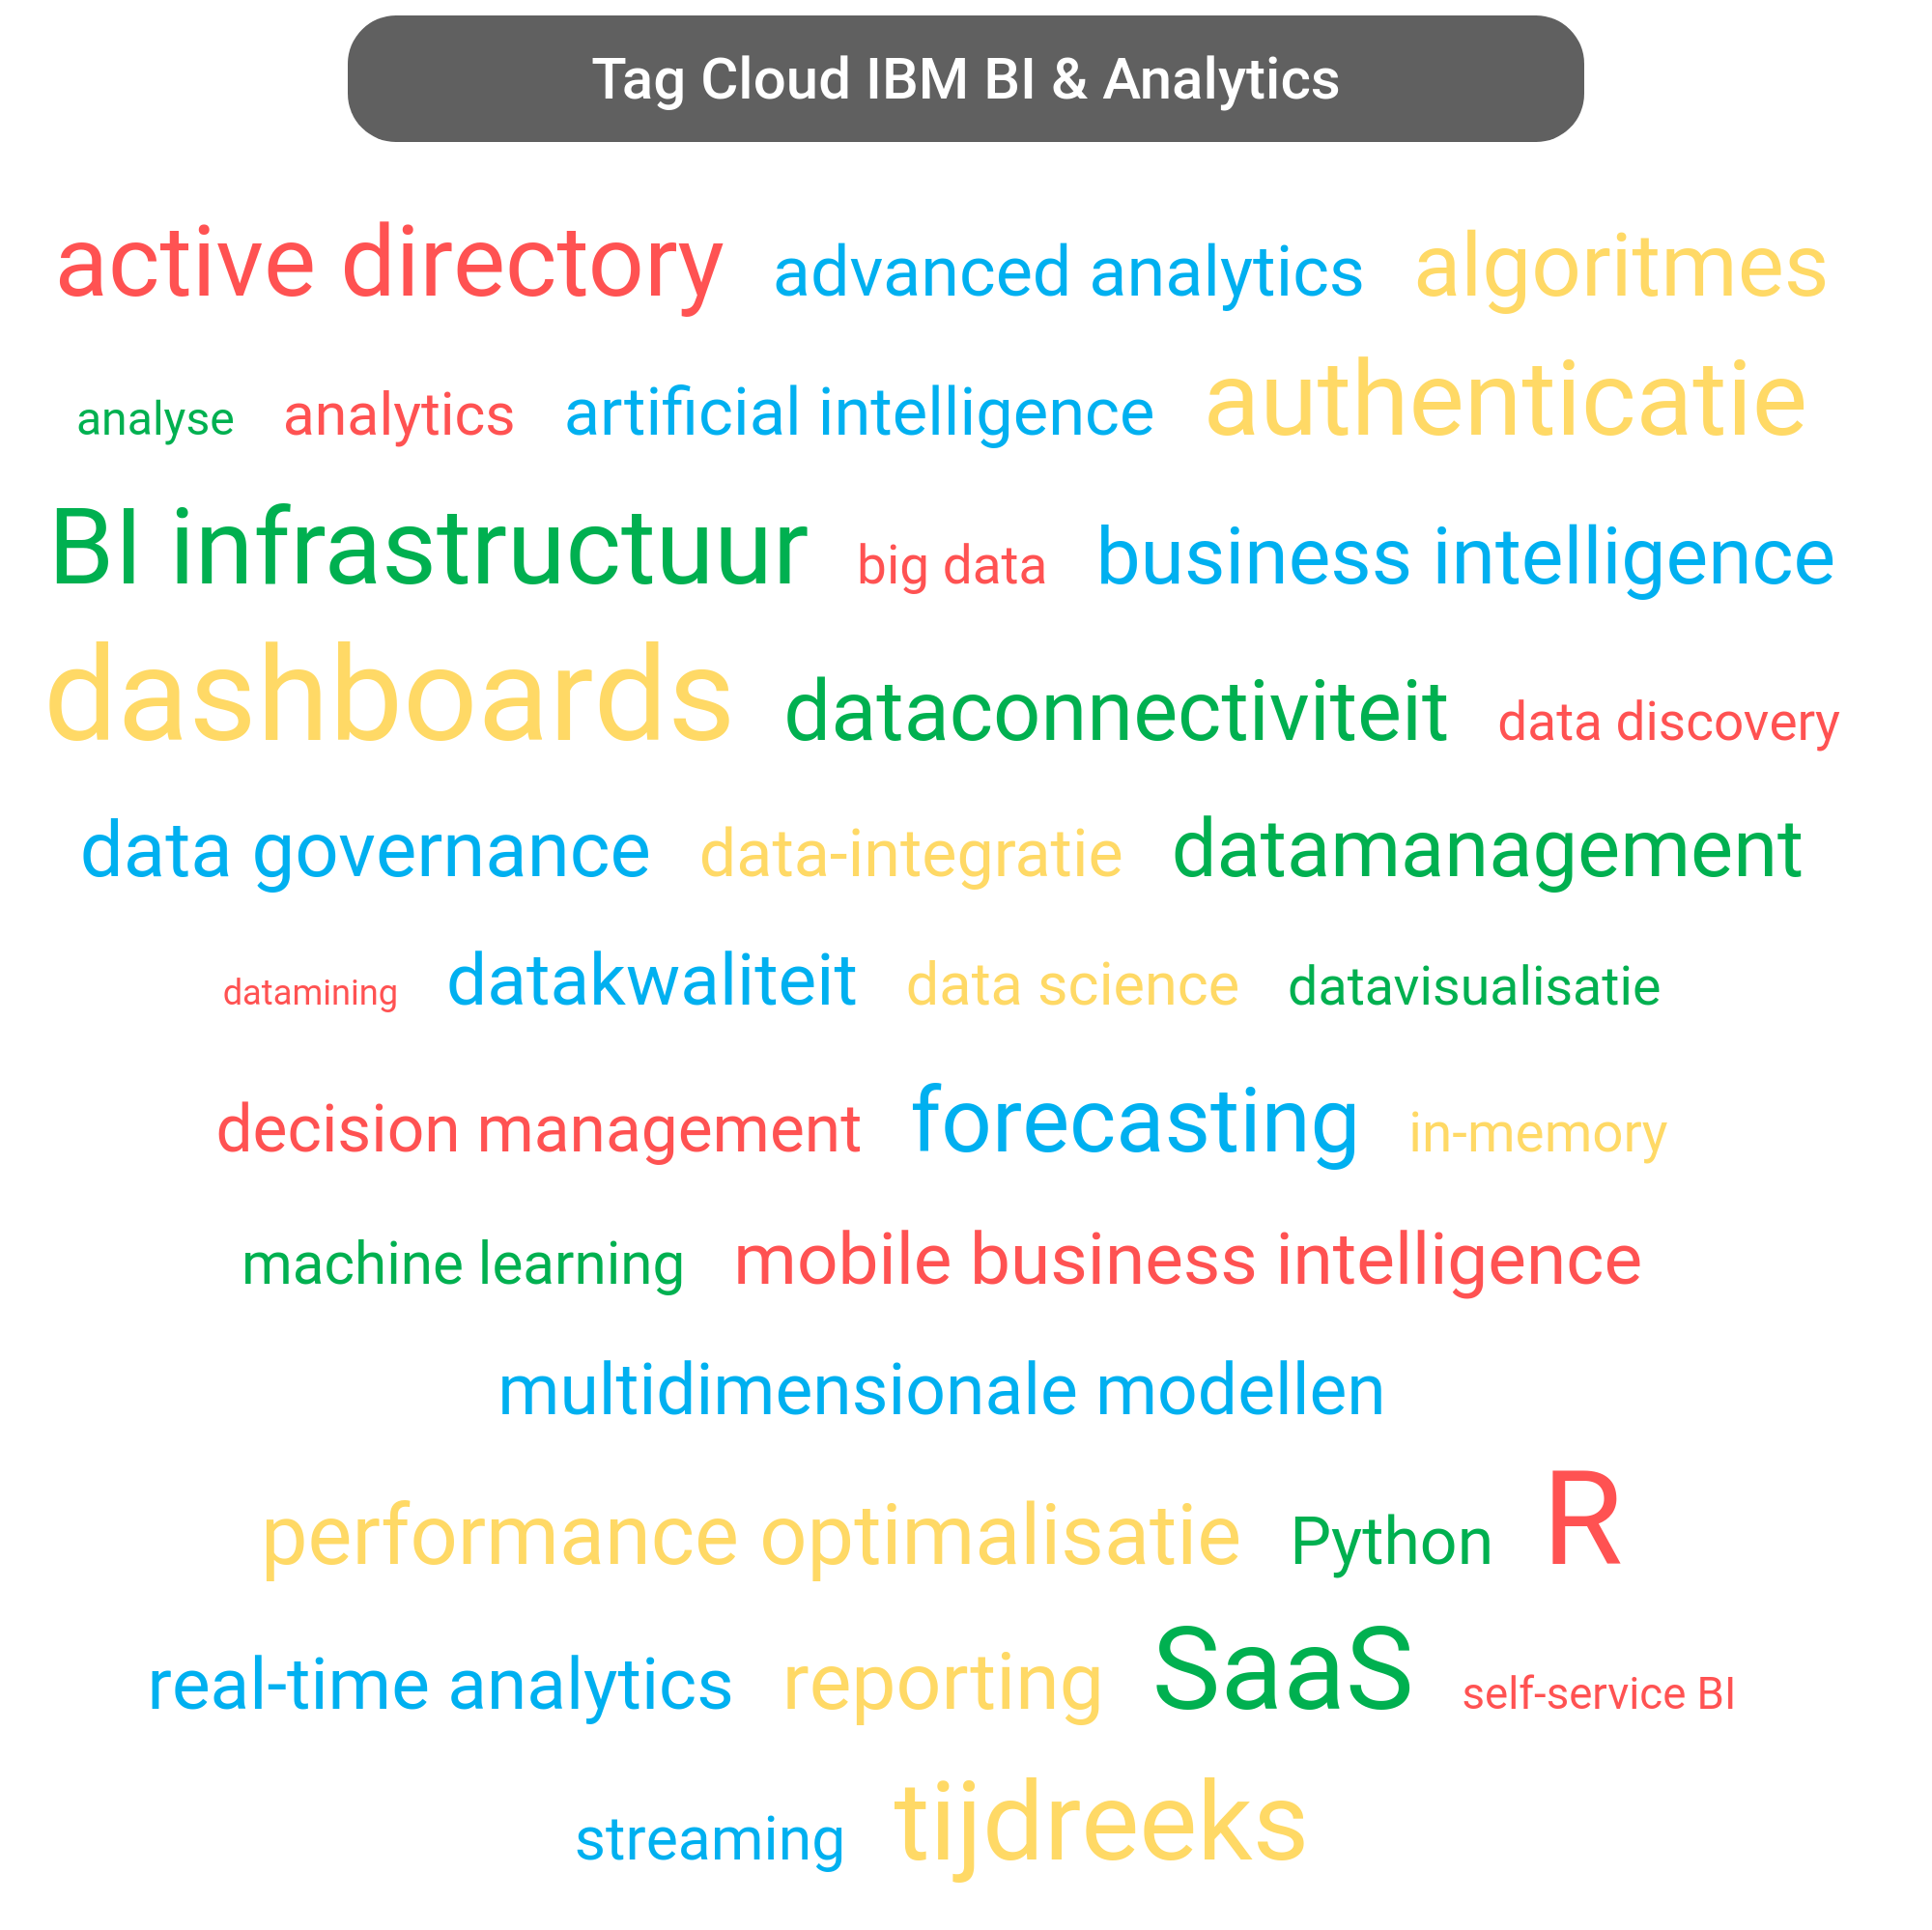 Tag cloud van IBM Business Analytics tools.